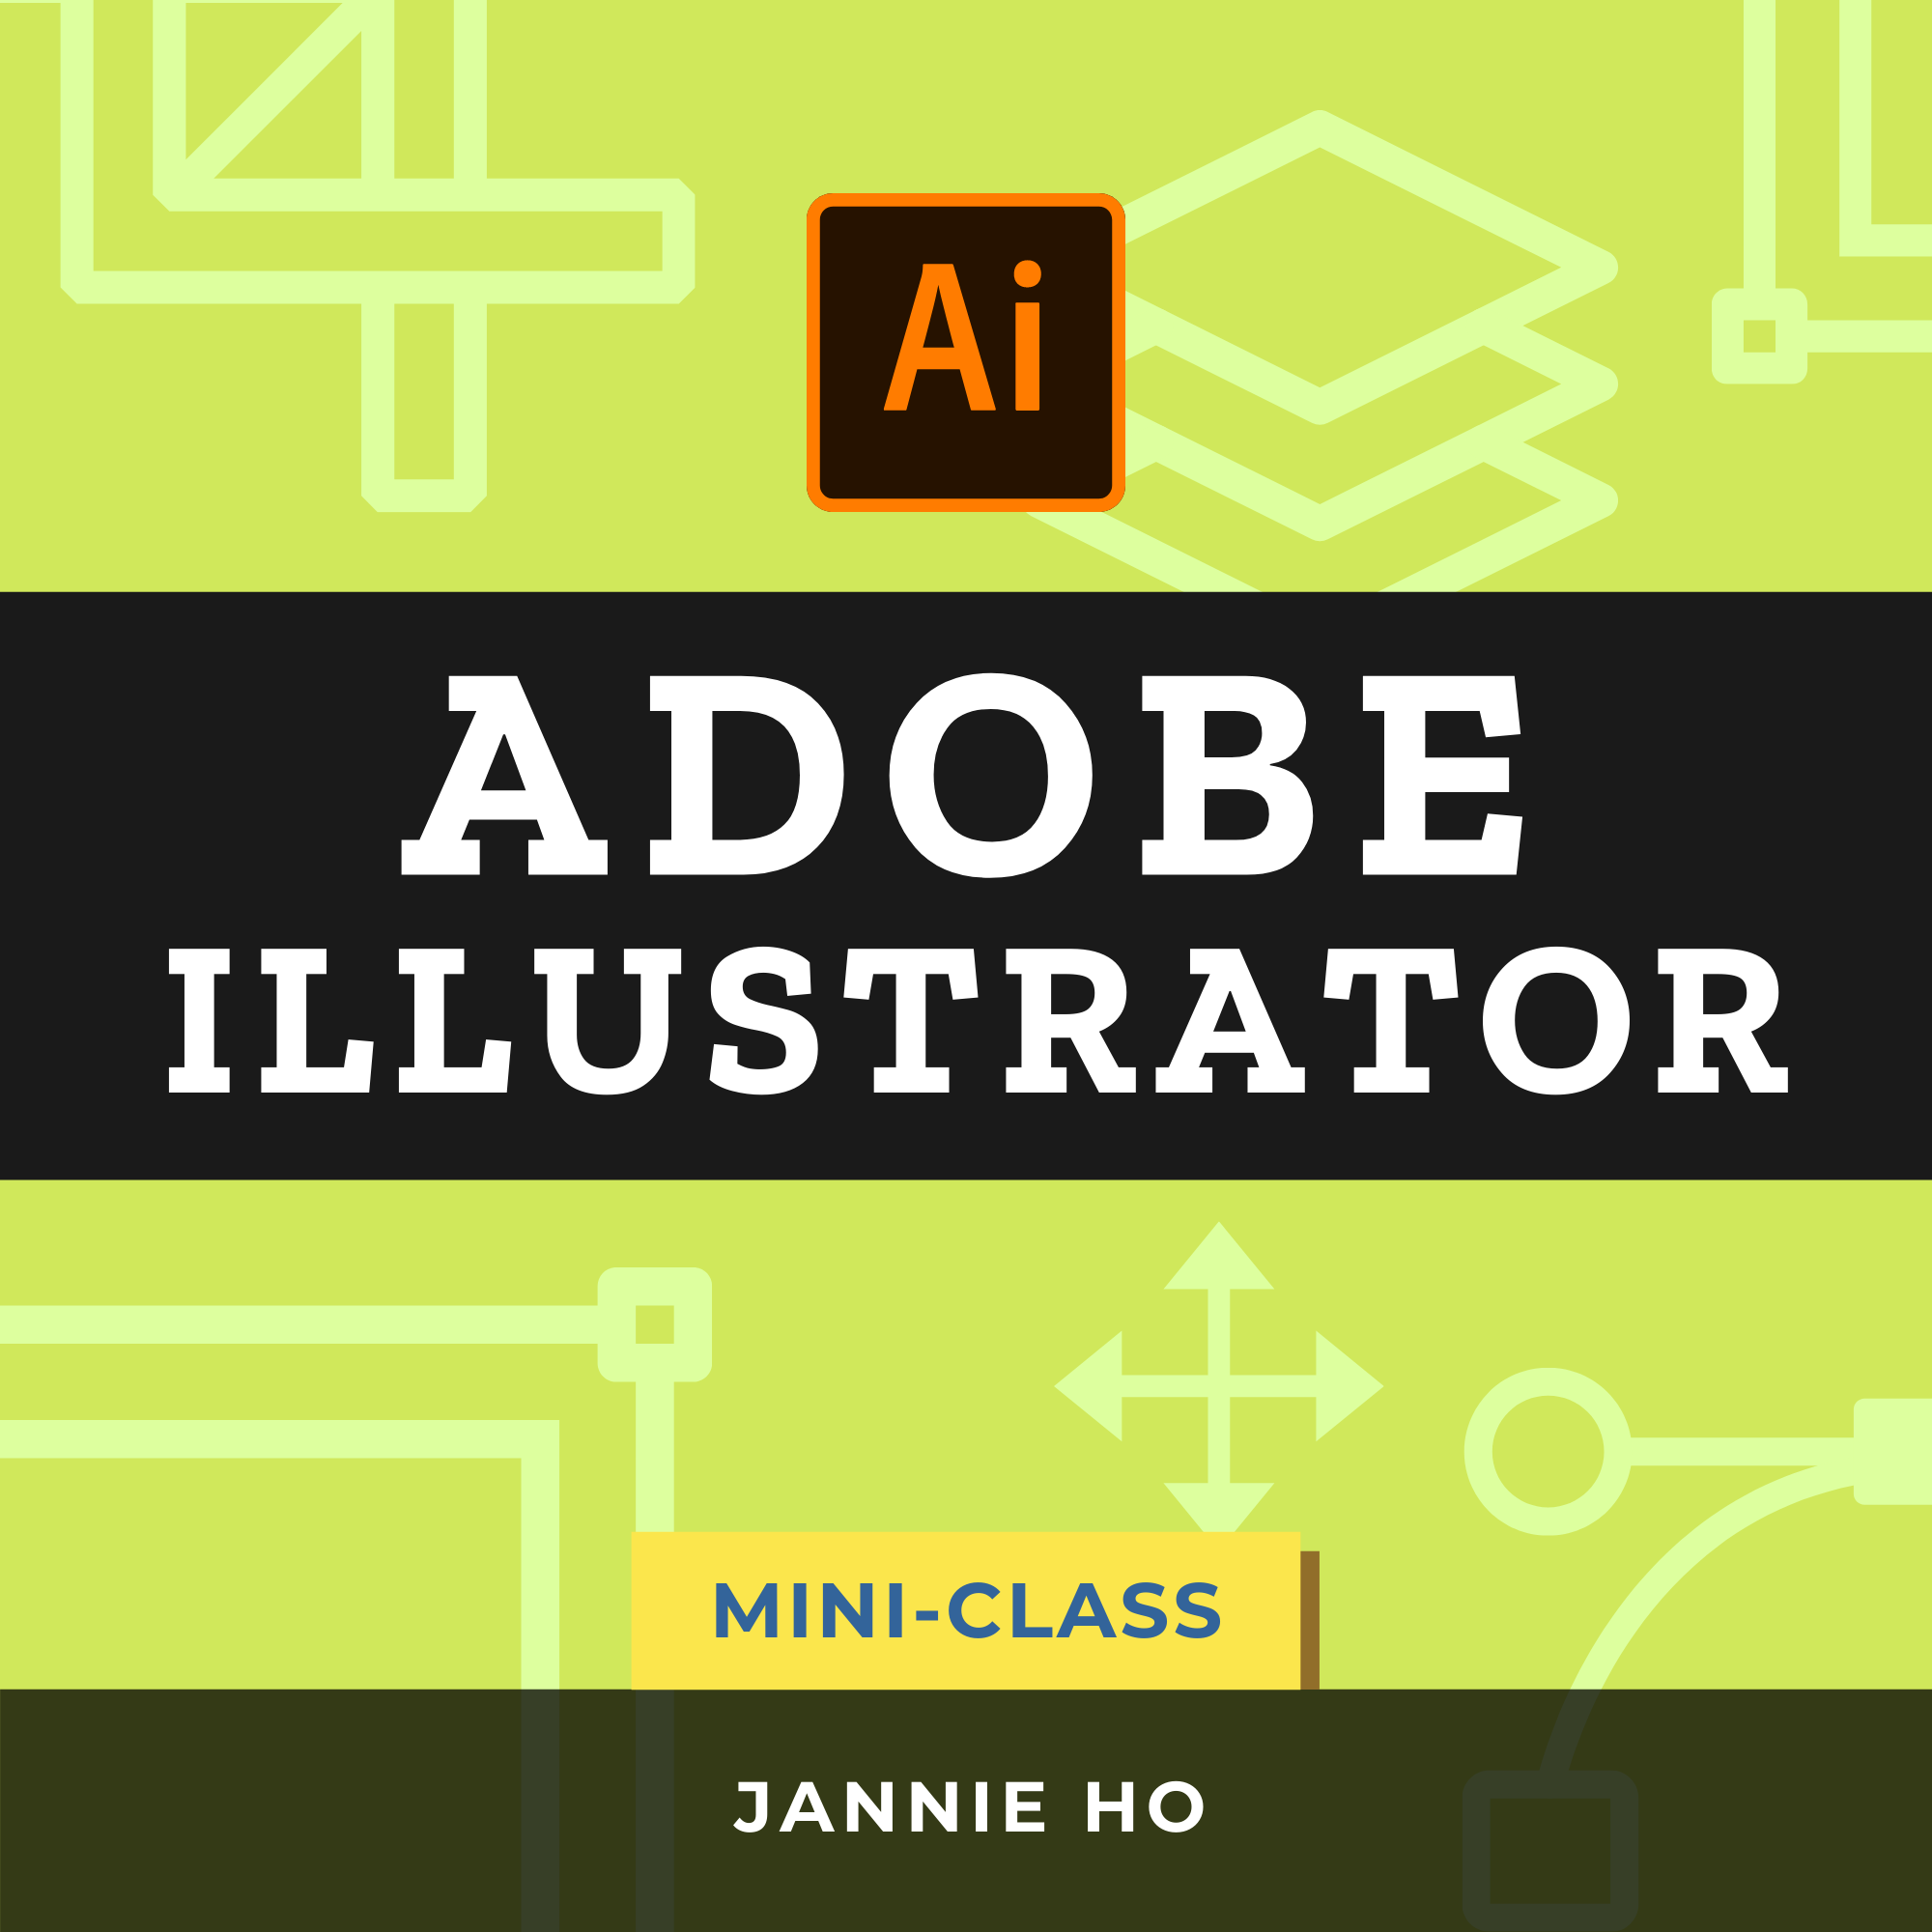 Adobe illustrator course image